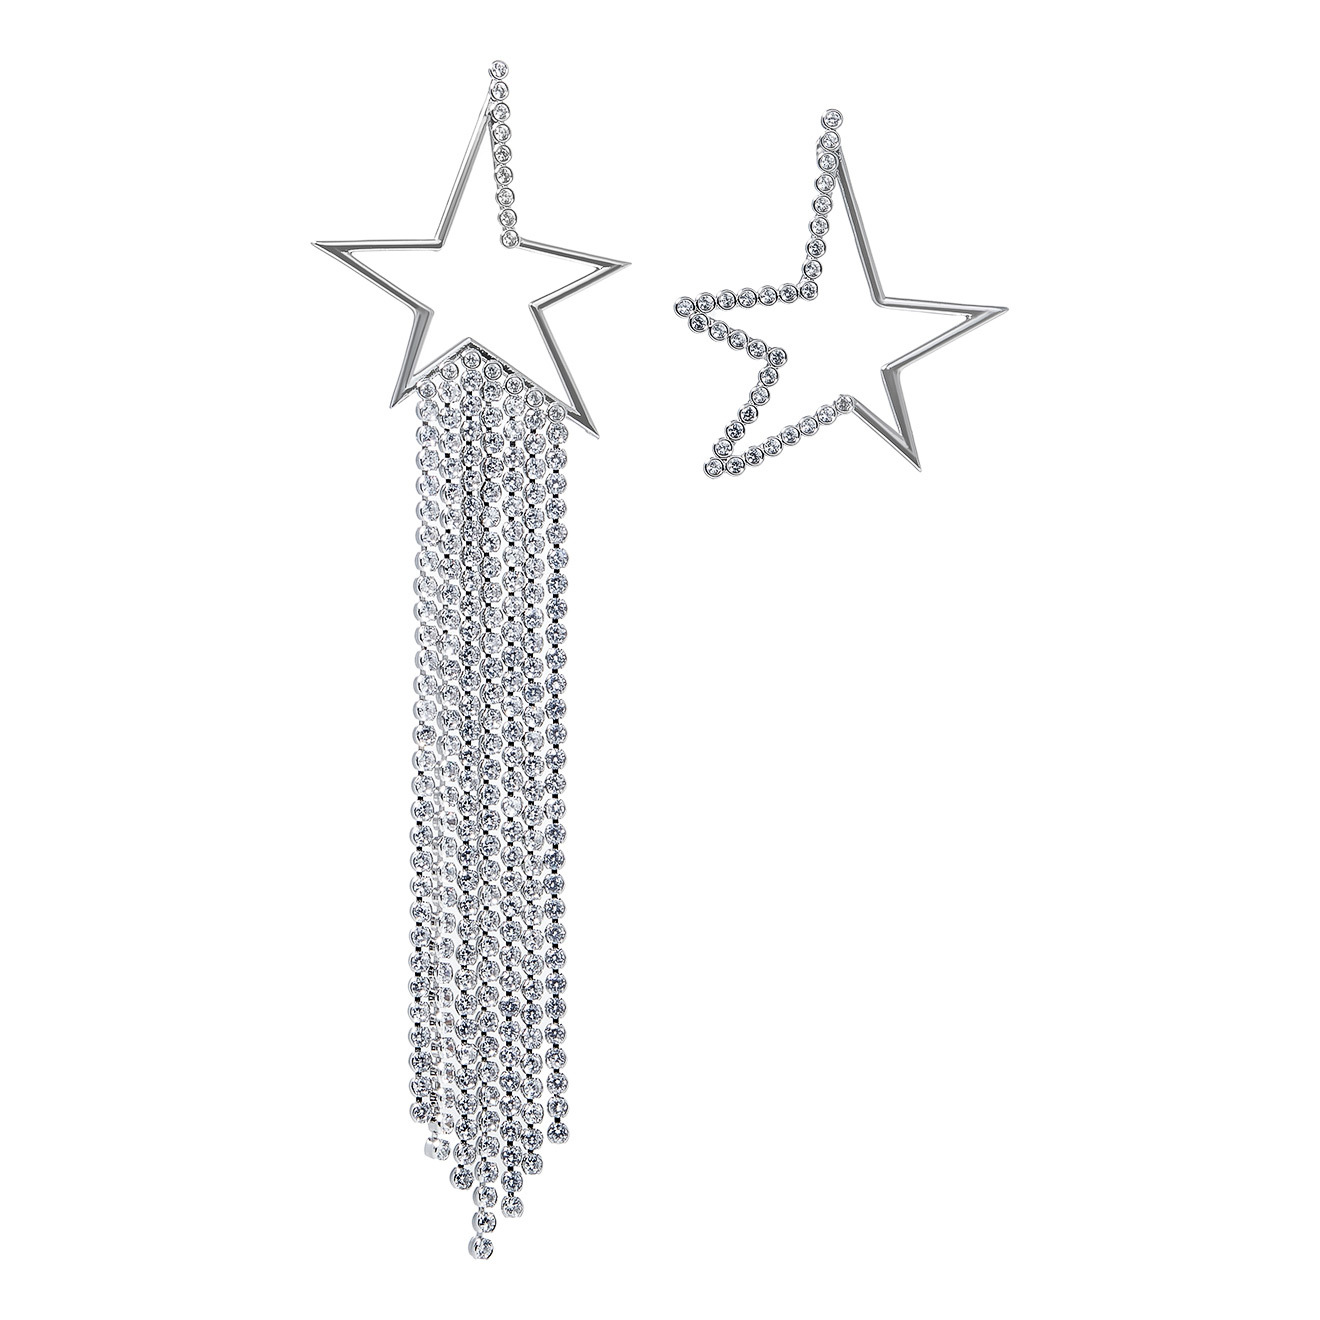 Herald Percy Асимметричные серьги звезды с каскадом из кристаллов